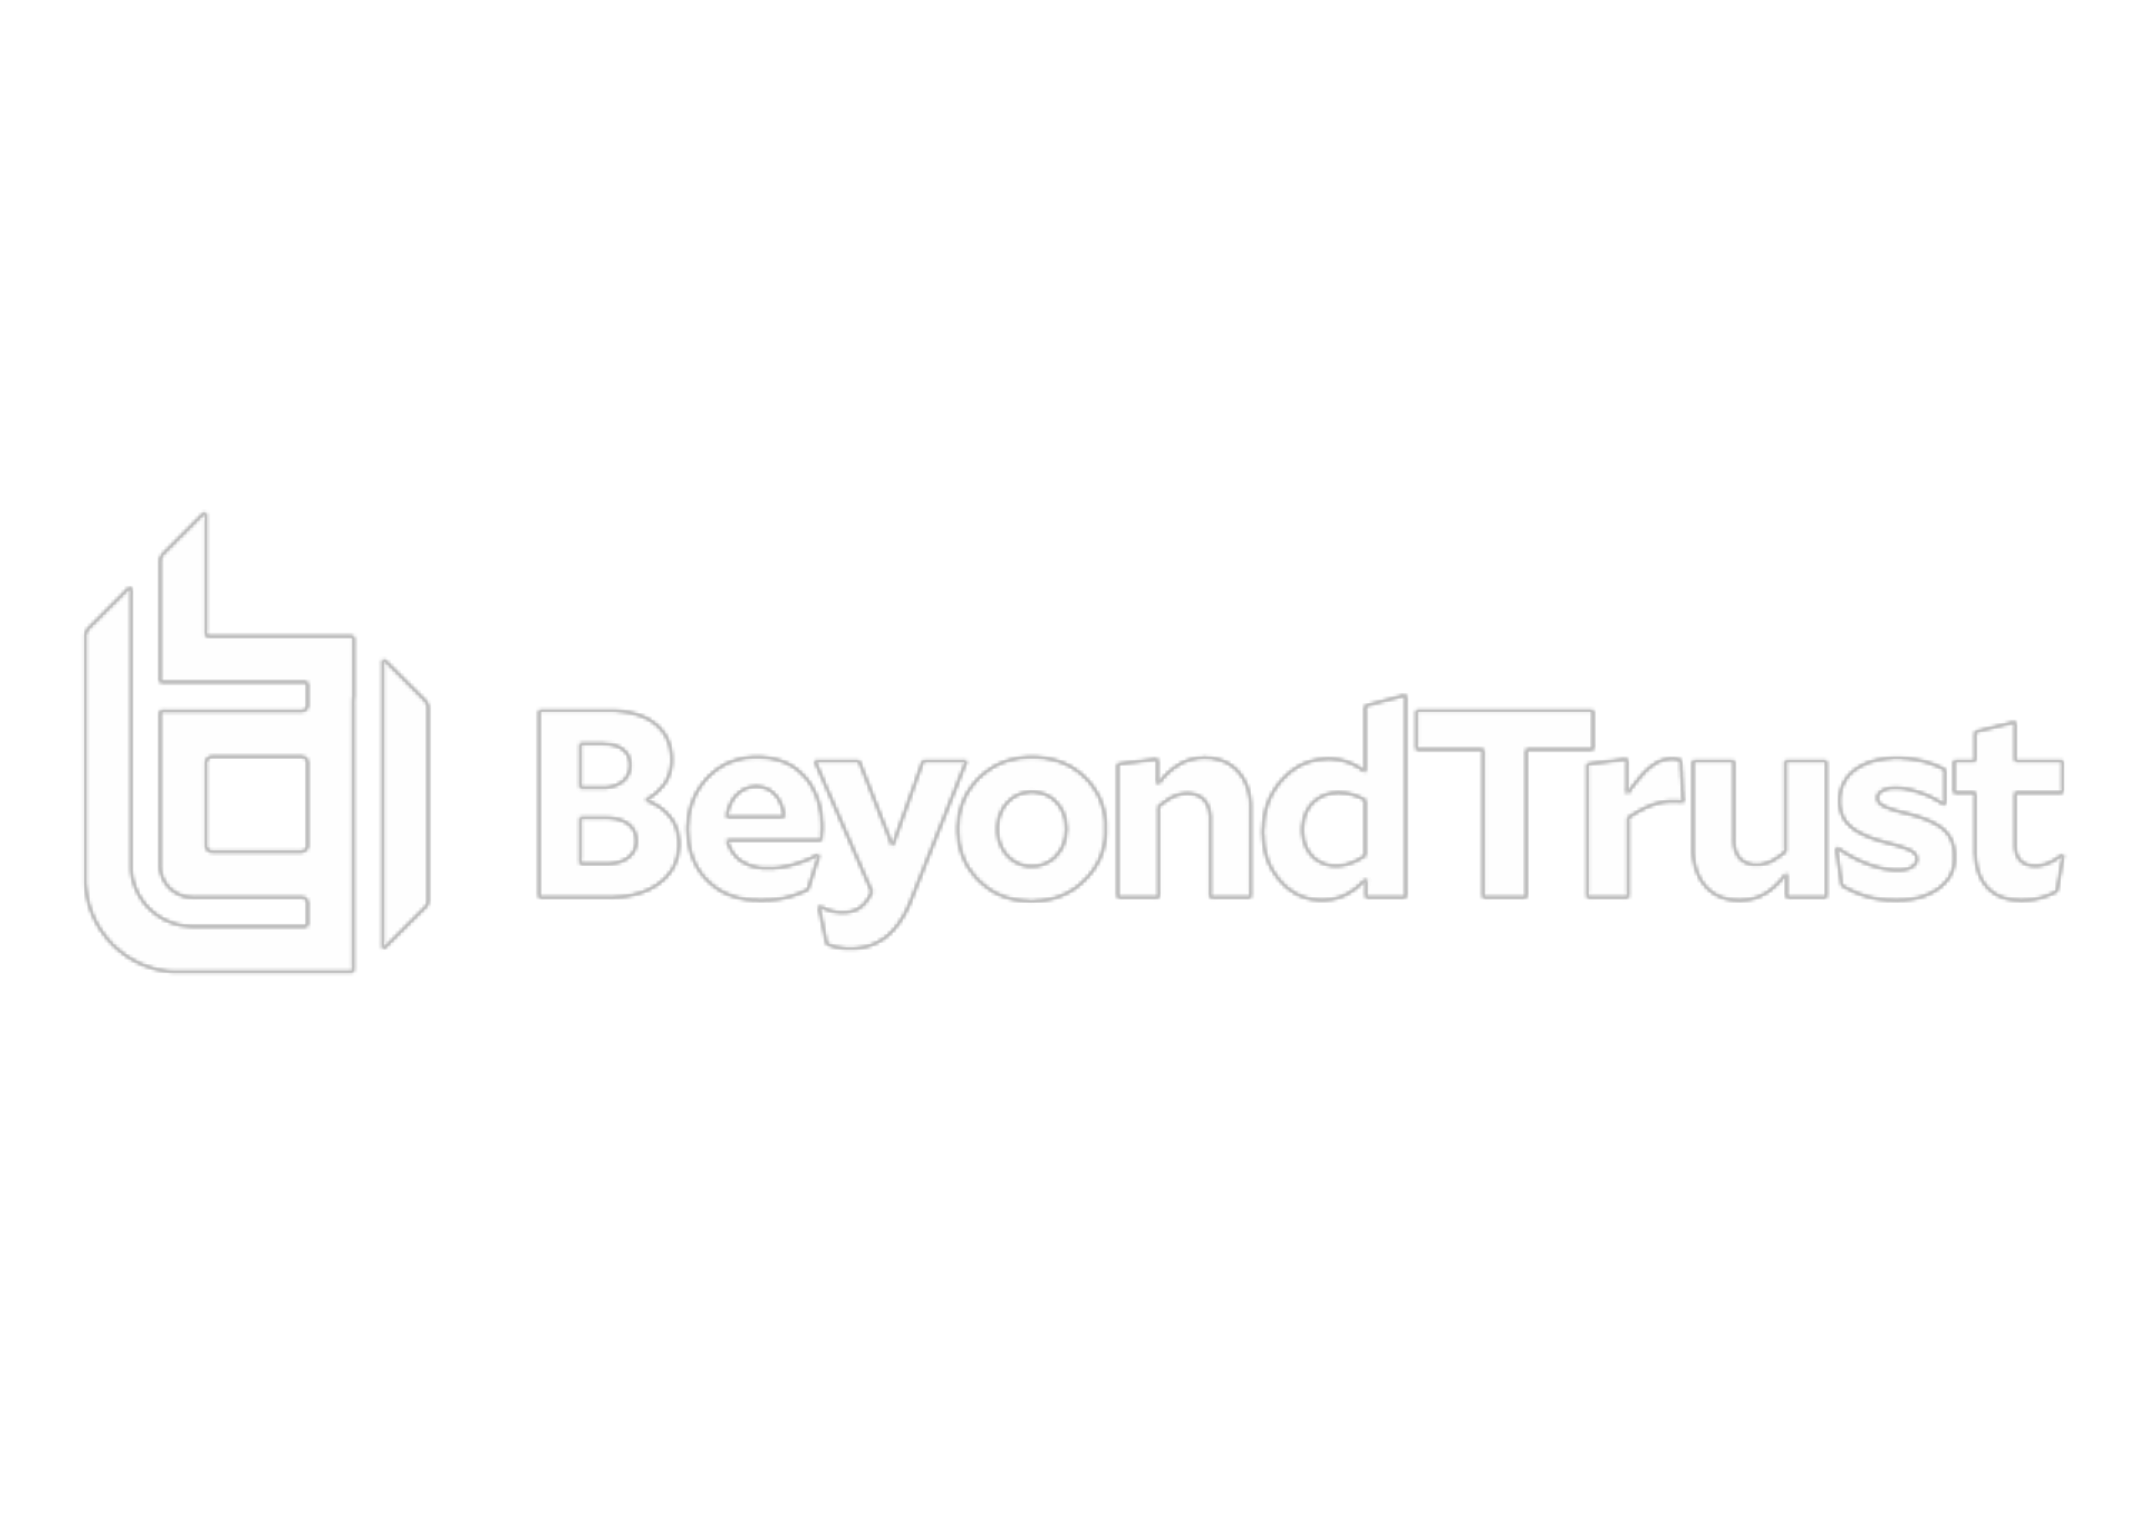 BeyondTrust Logo